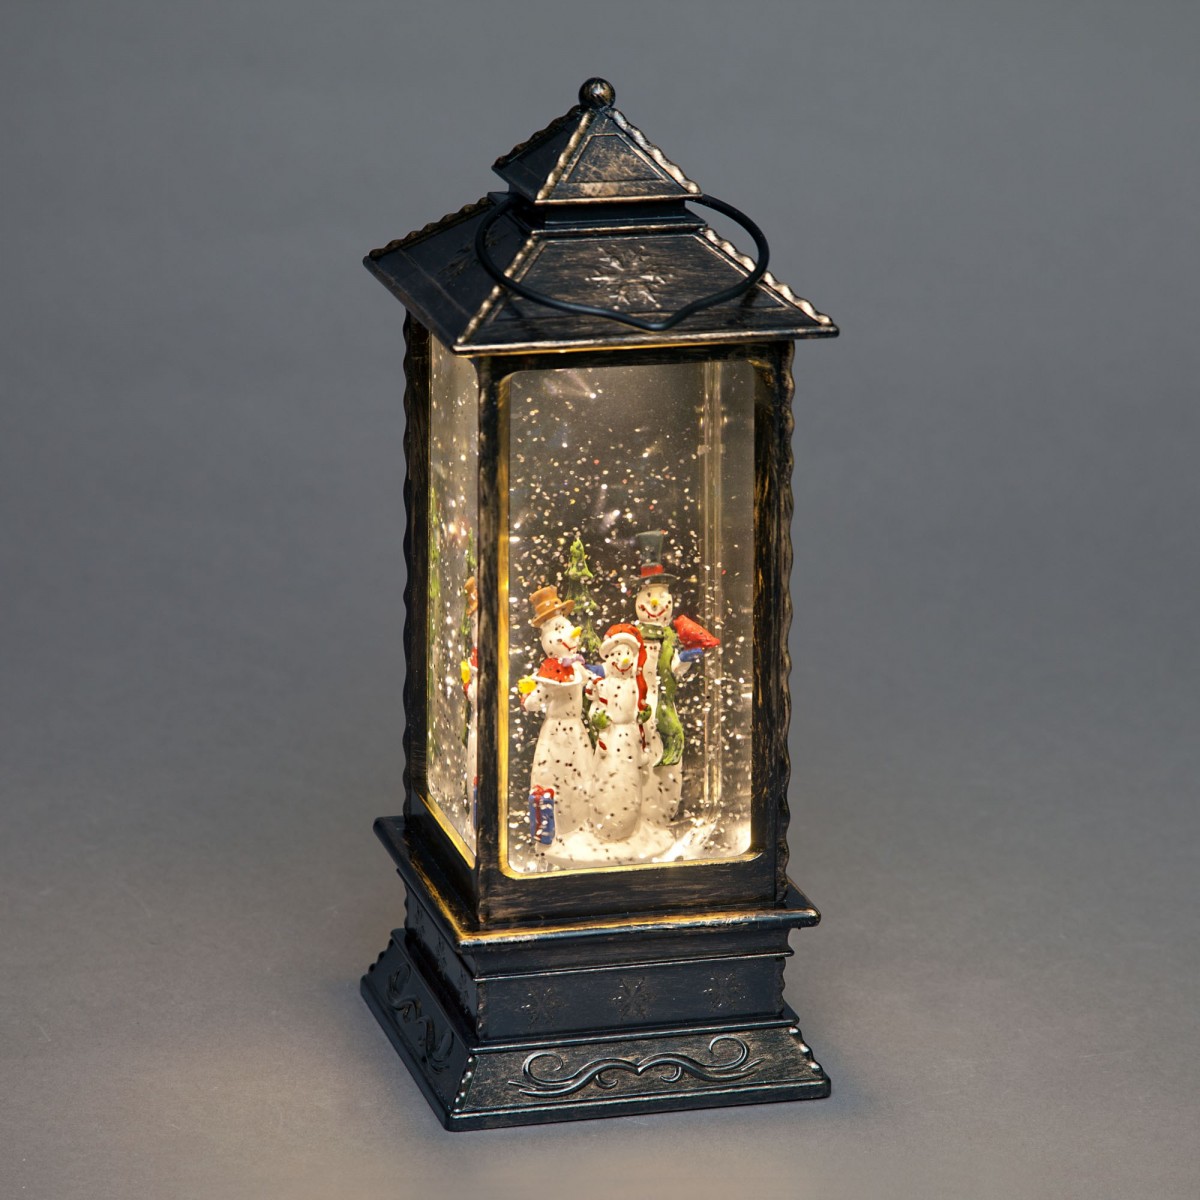 Light Up Christmas Globe Water Lantern with Snowman Scene